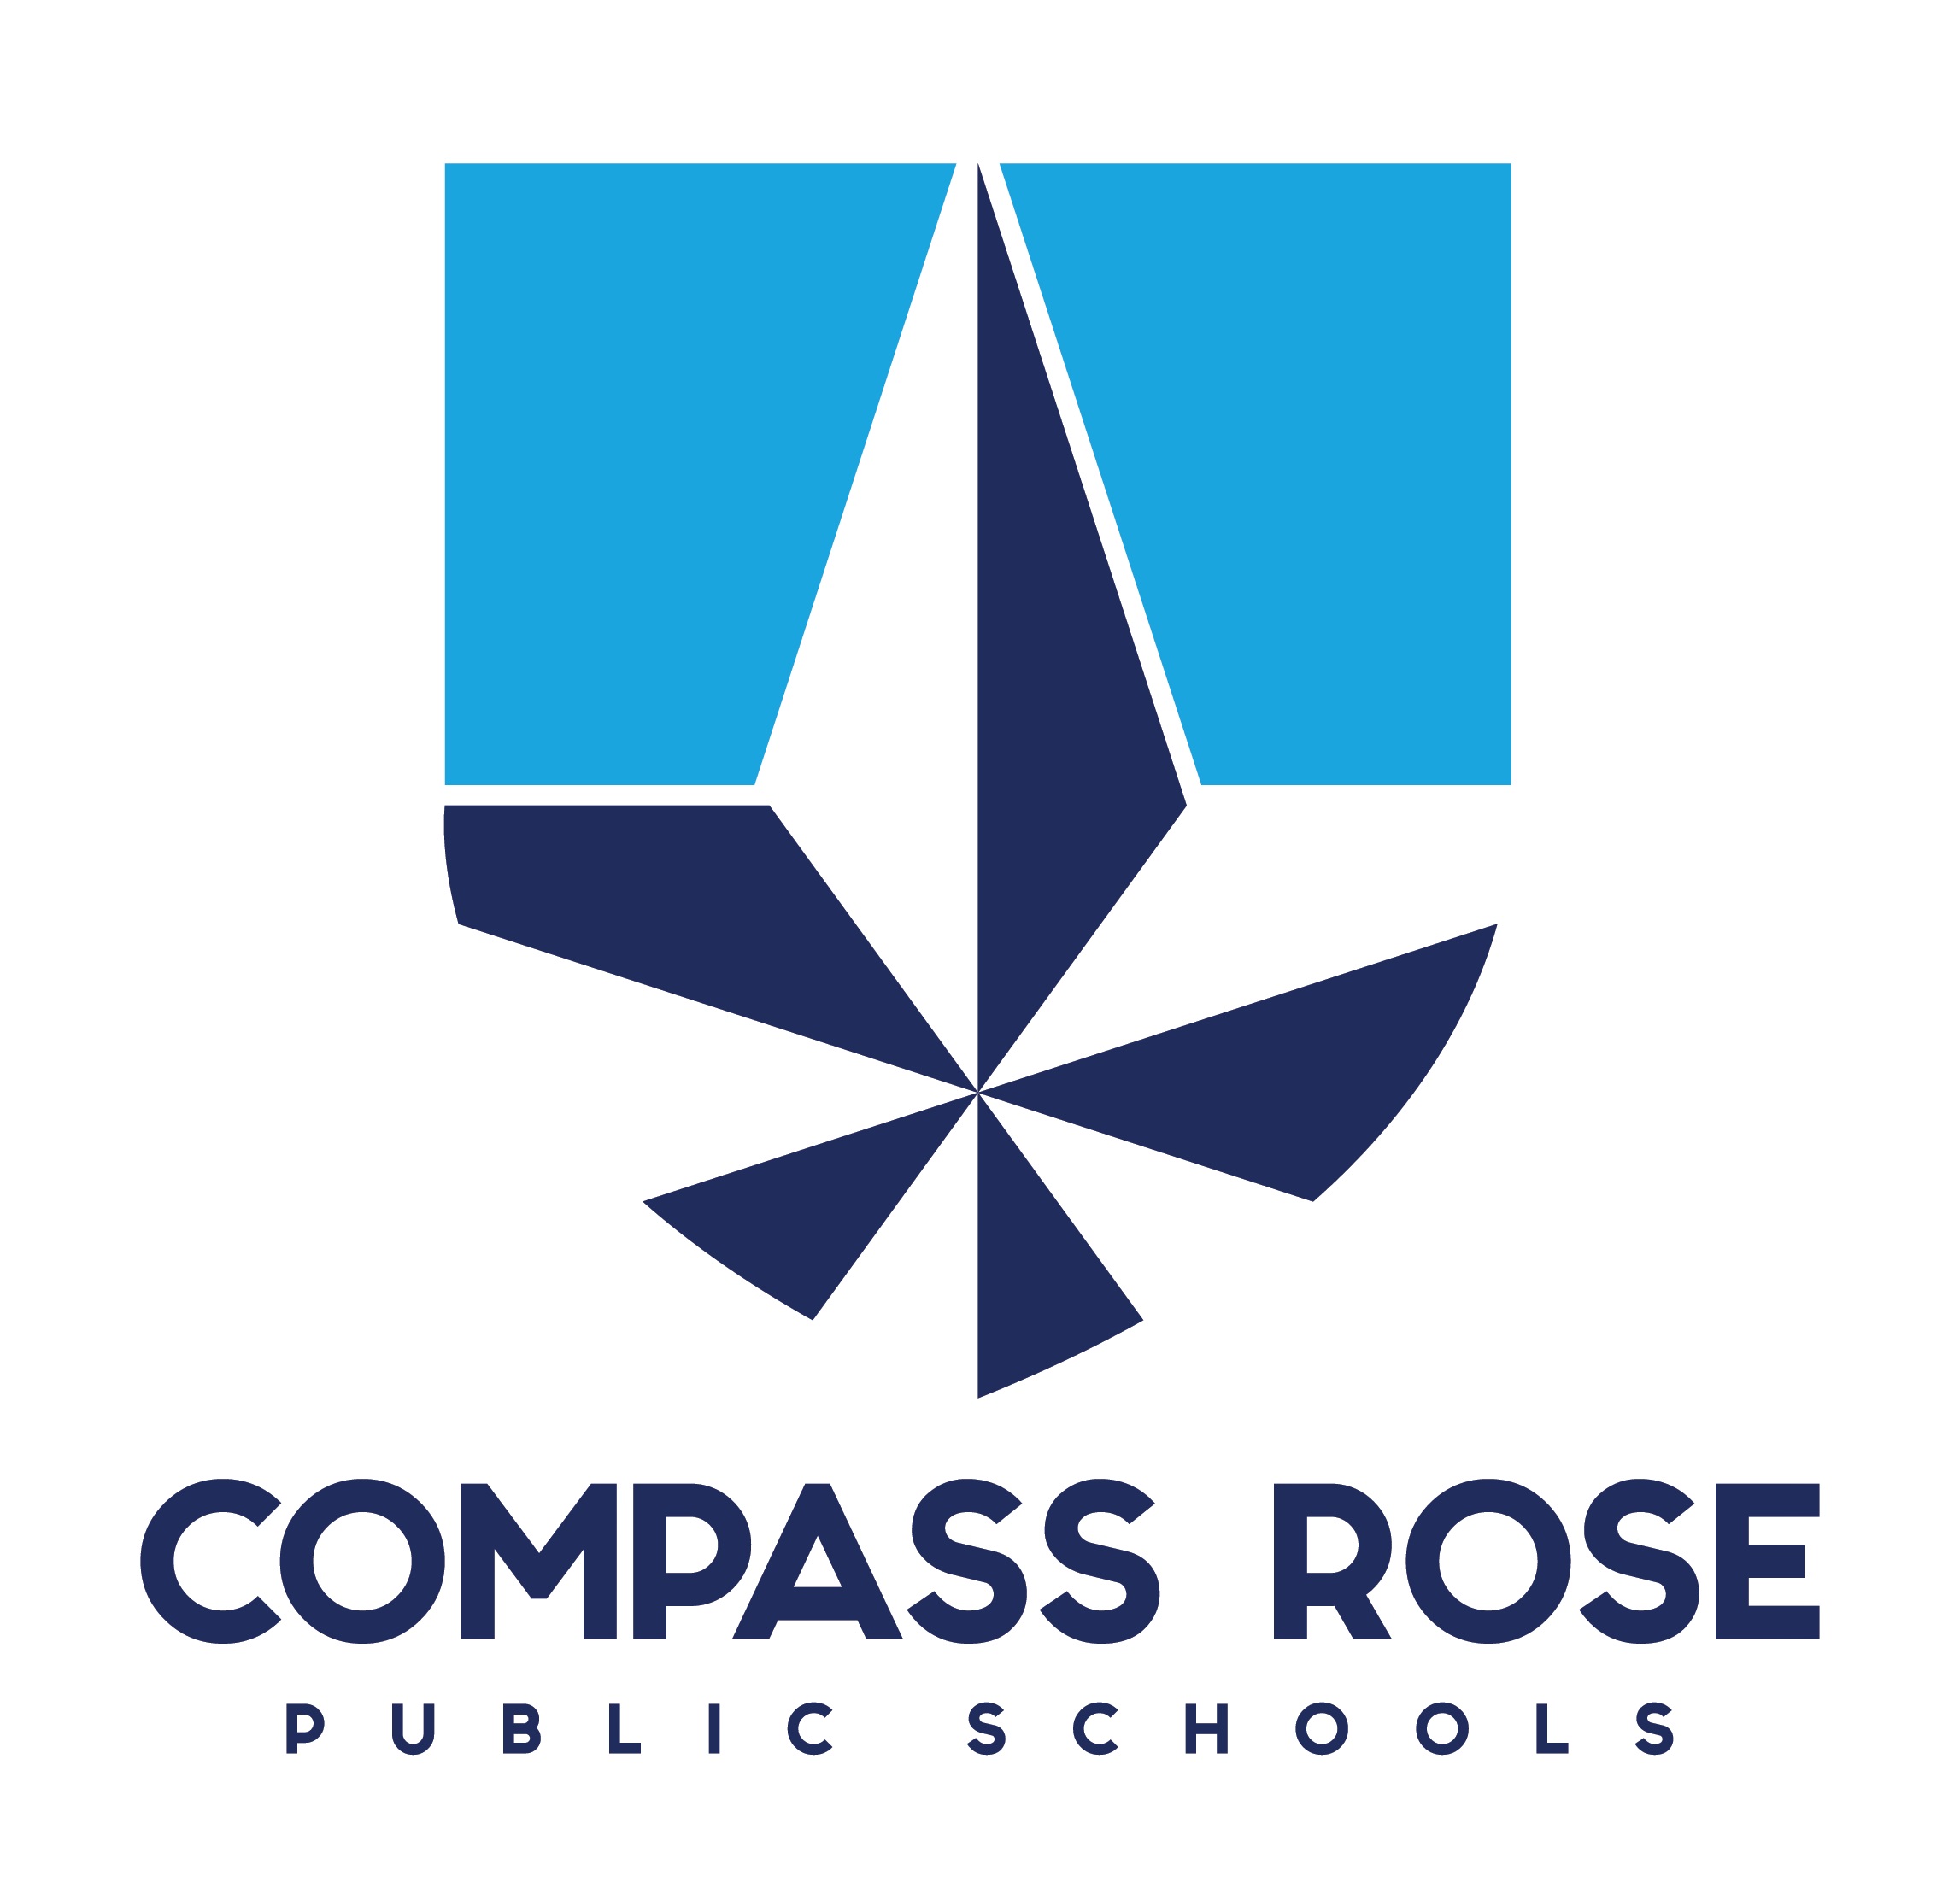 Compass Rose Public Schools logo